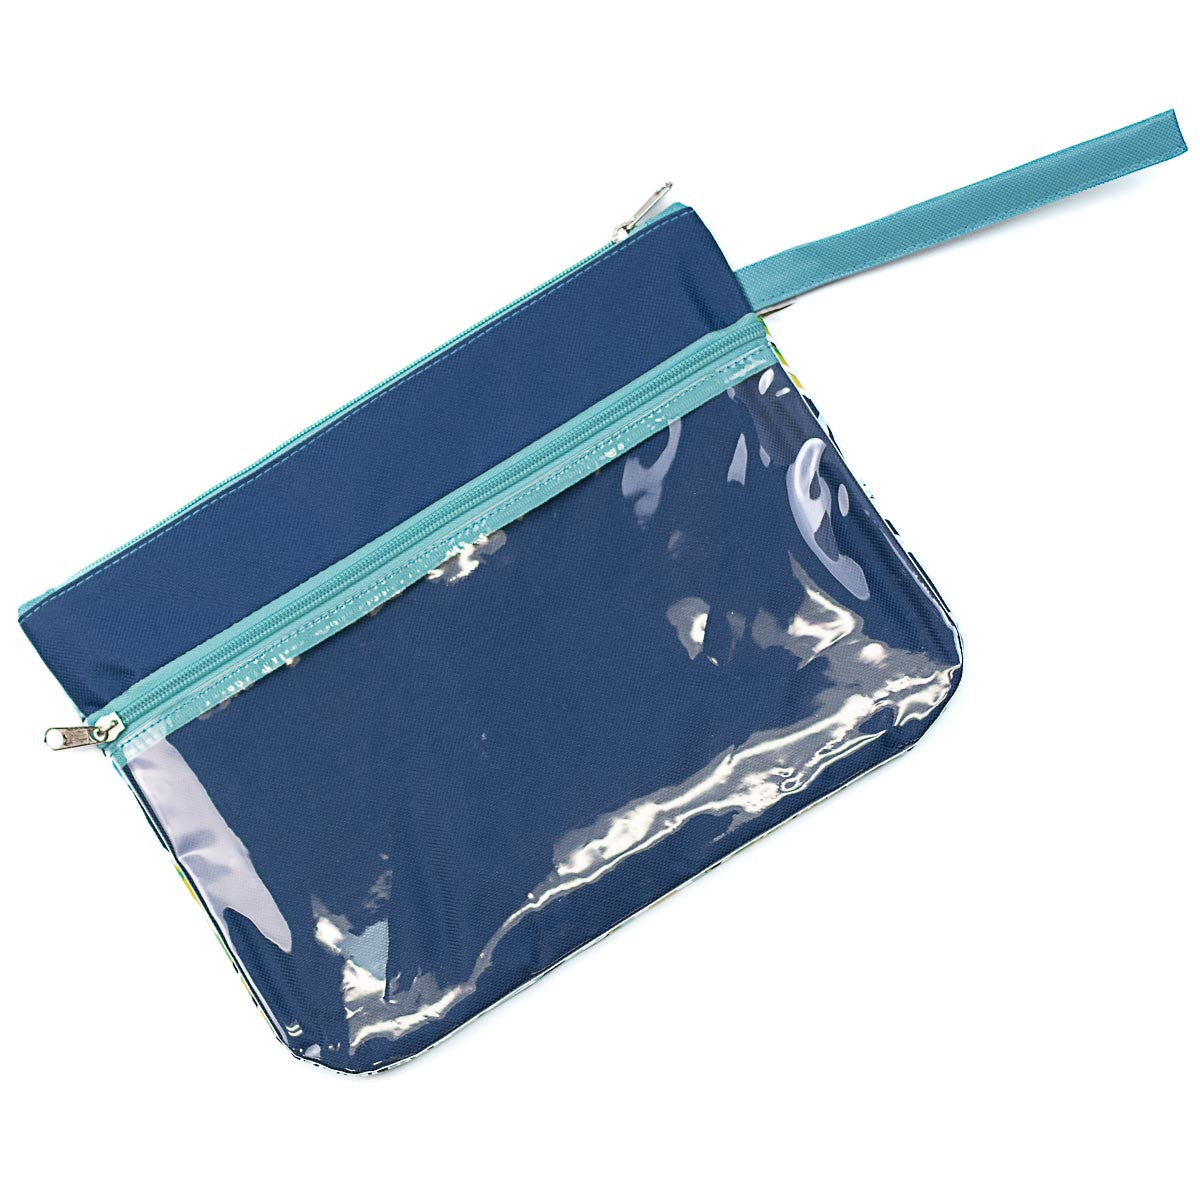 Veracruz Wet/Dry Bag in Royal Turquoise